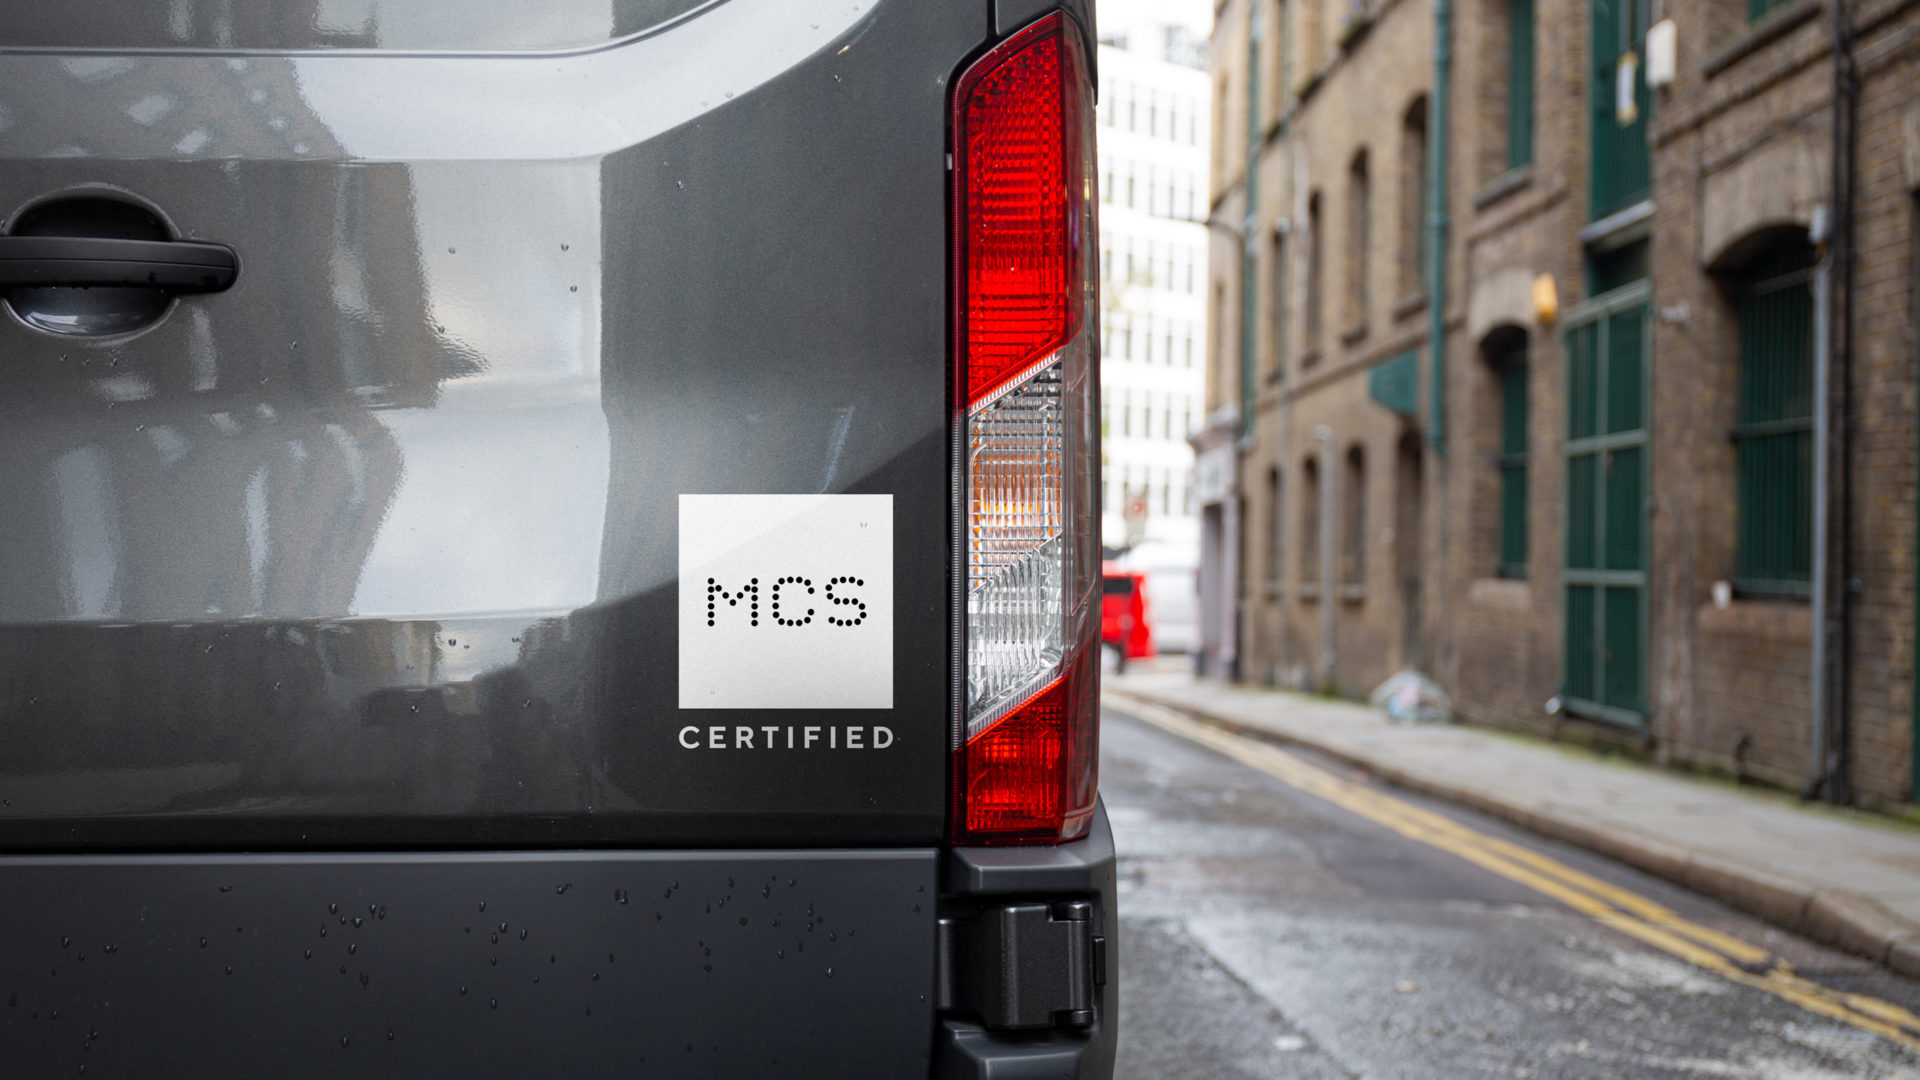 MCS Certification mark on installer's van